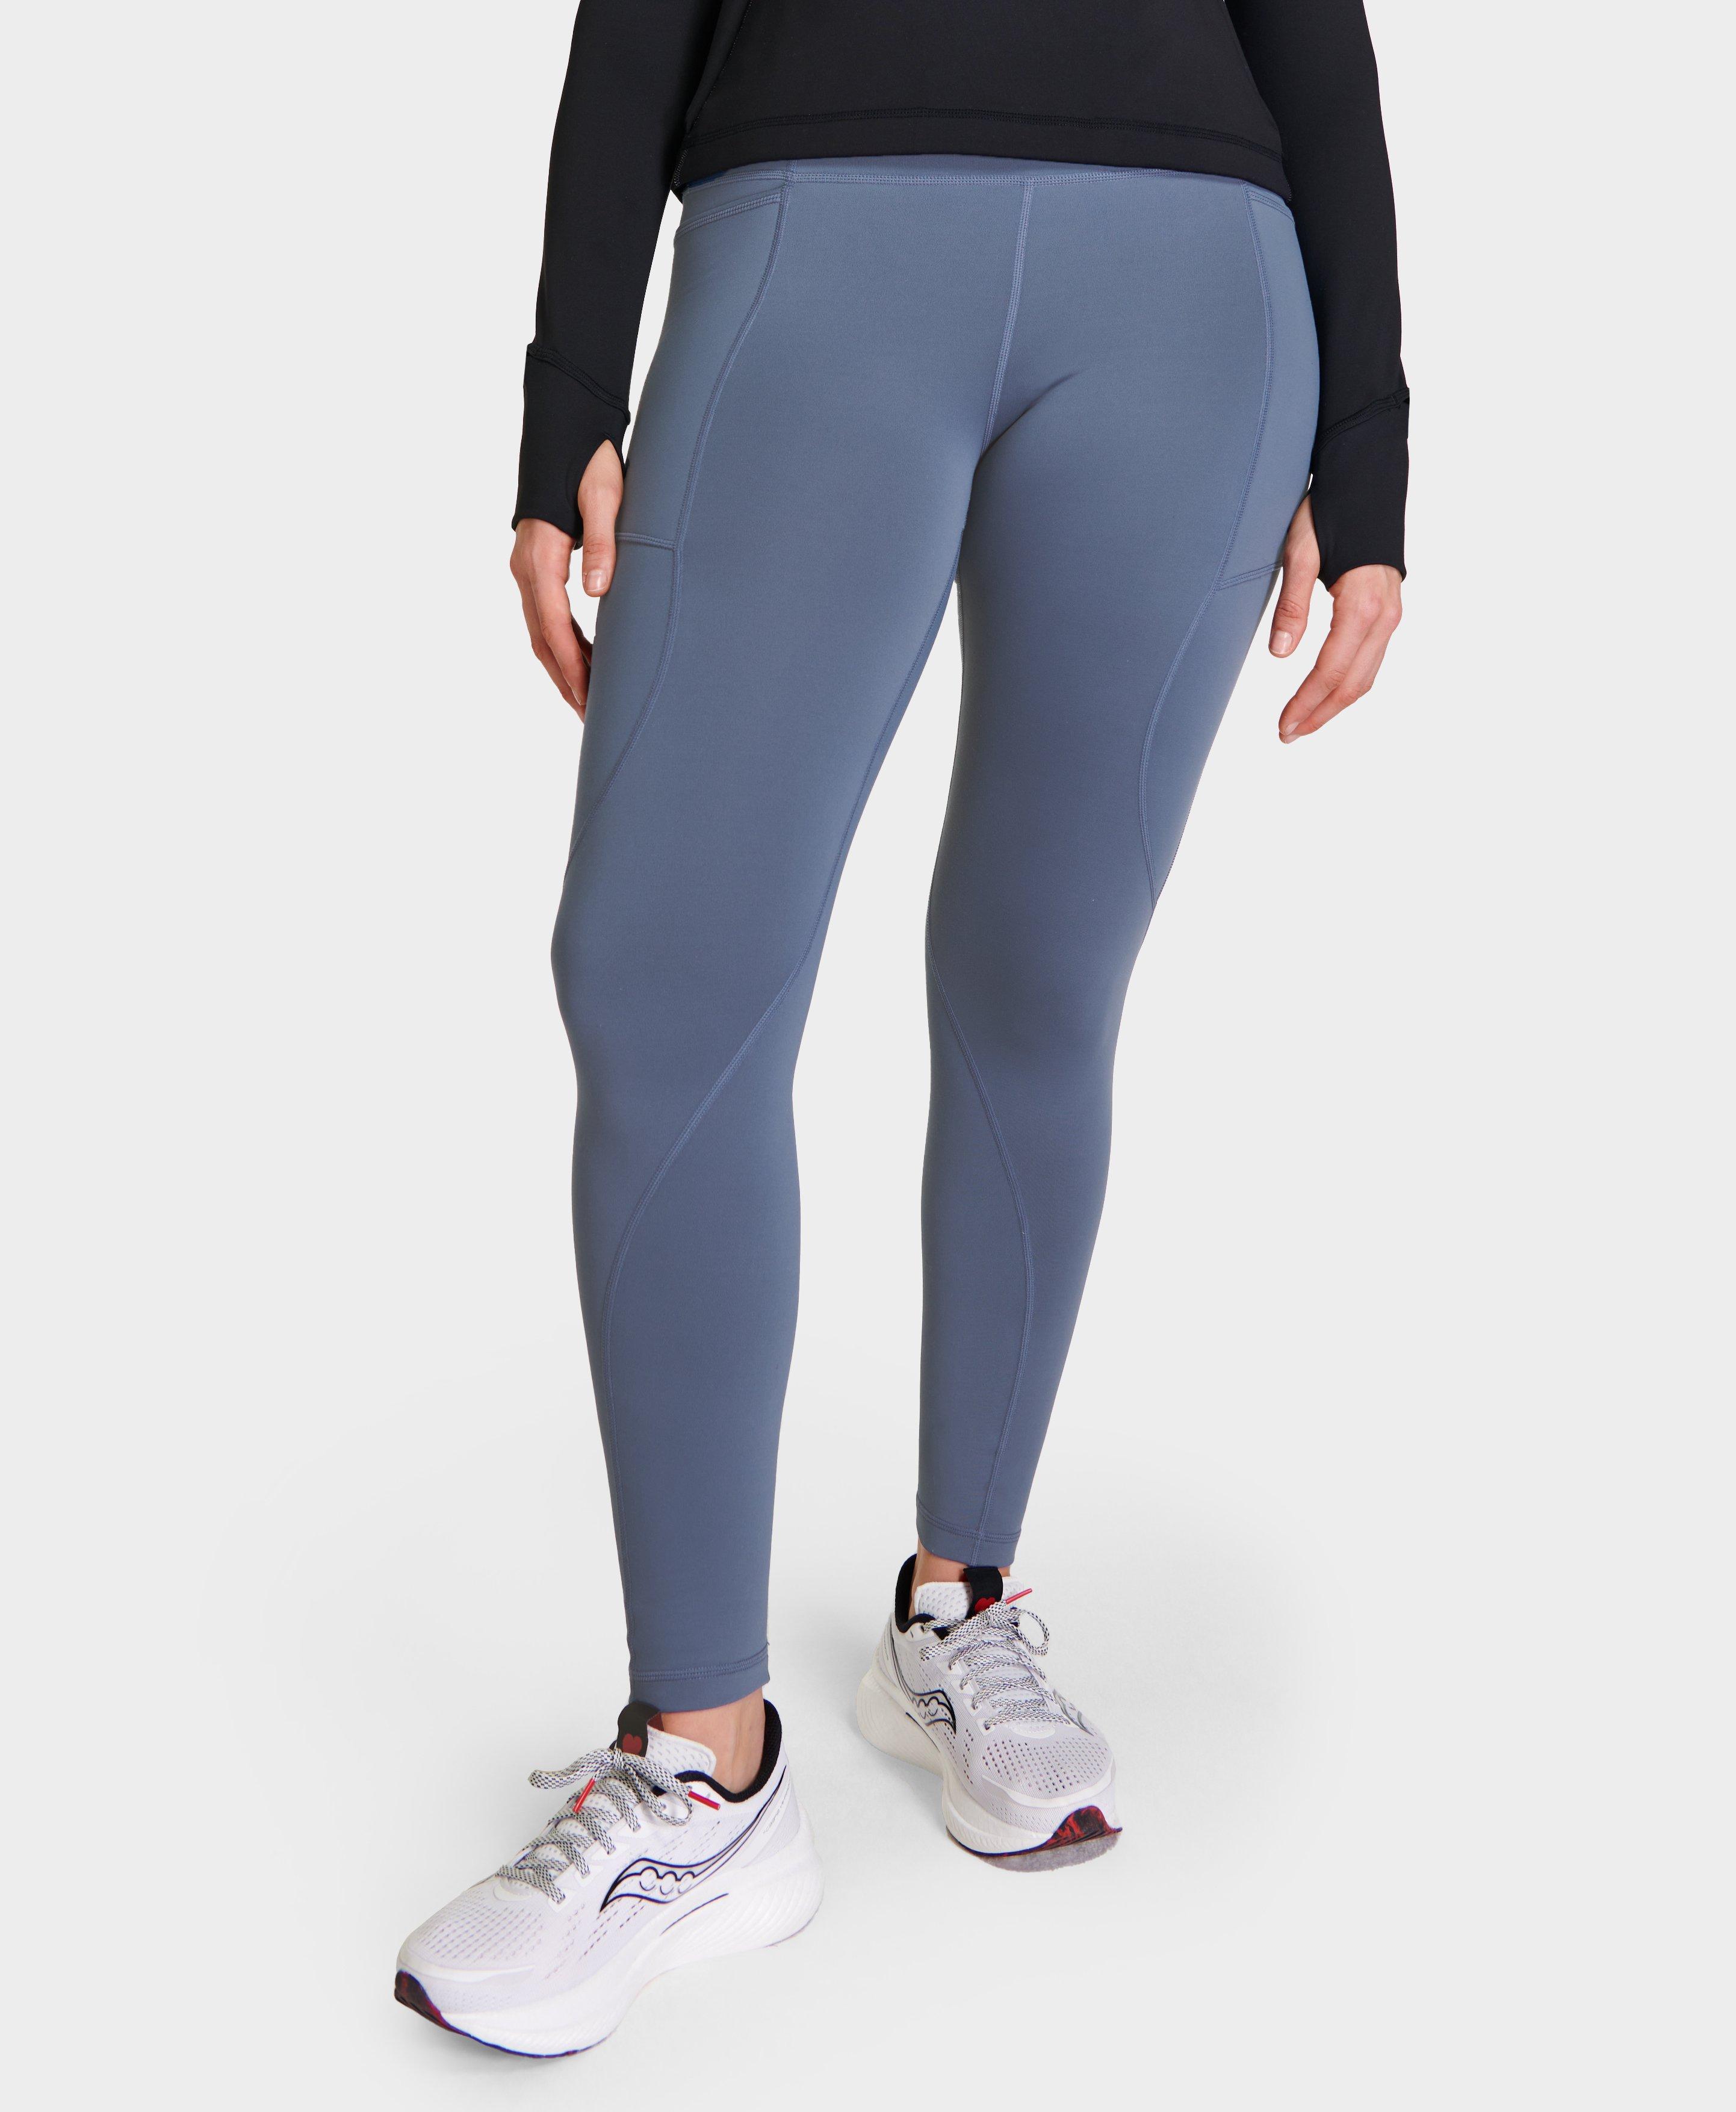 Sweaty Betty Therma Boost 2.0 Reflective Running Leggings, Grey SB